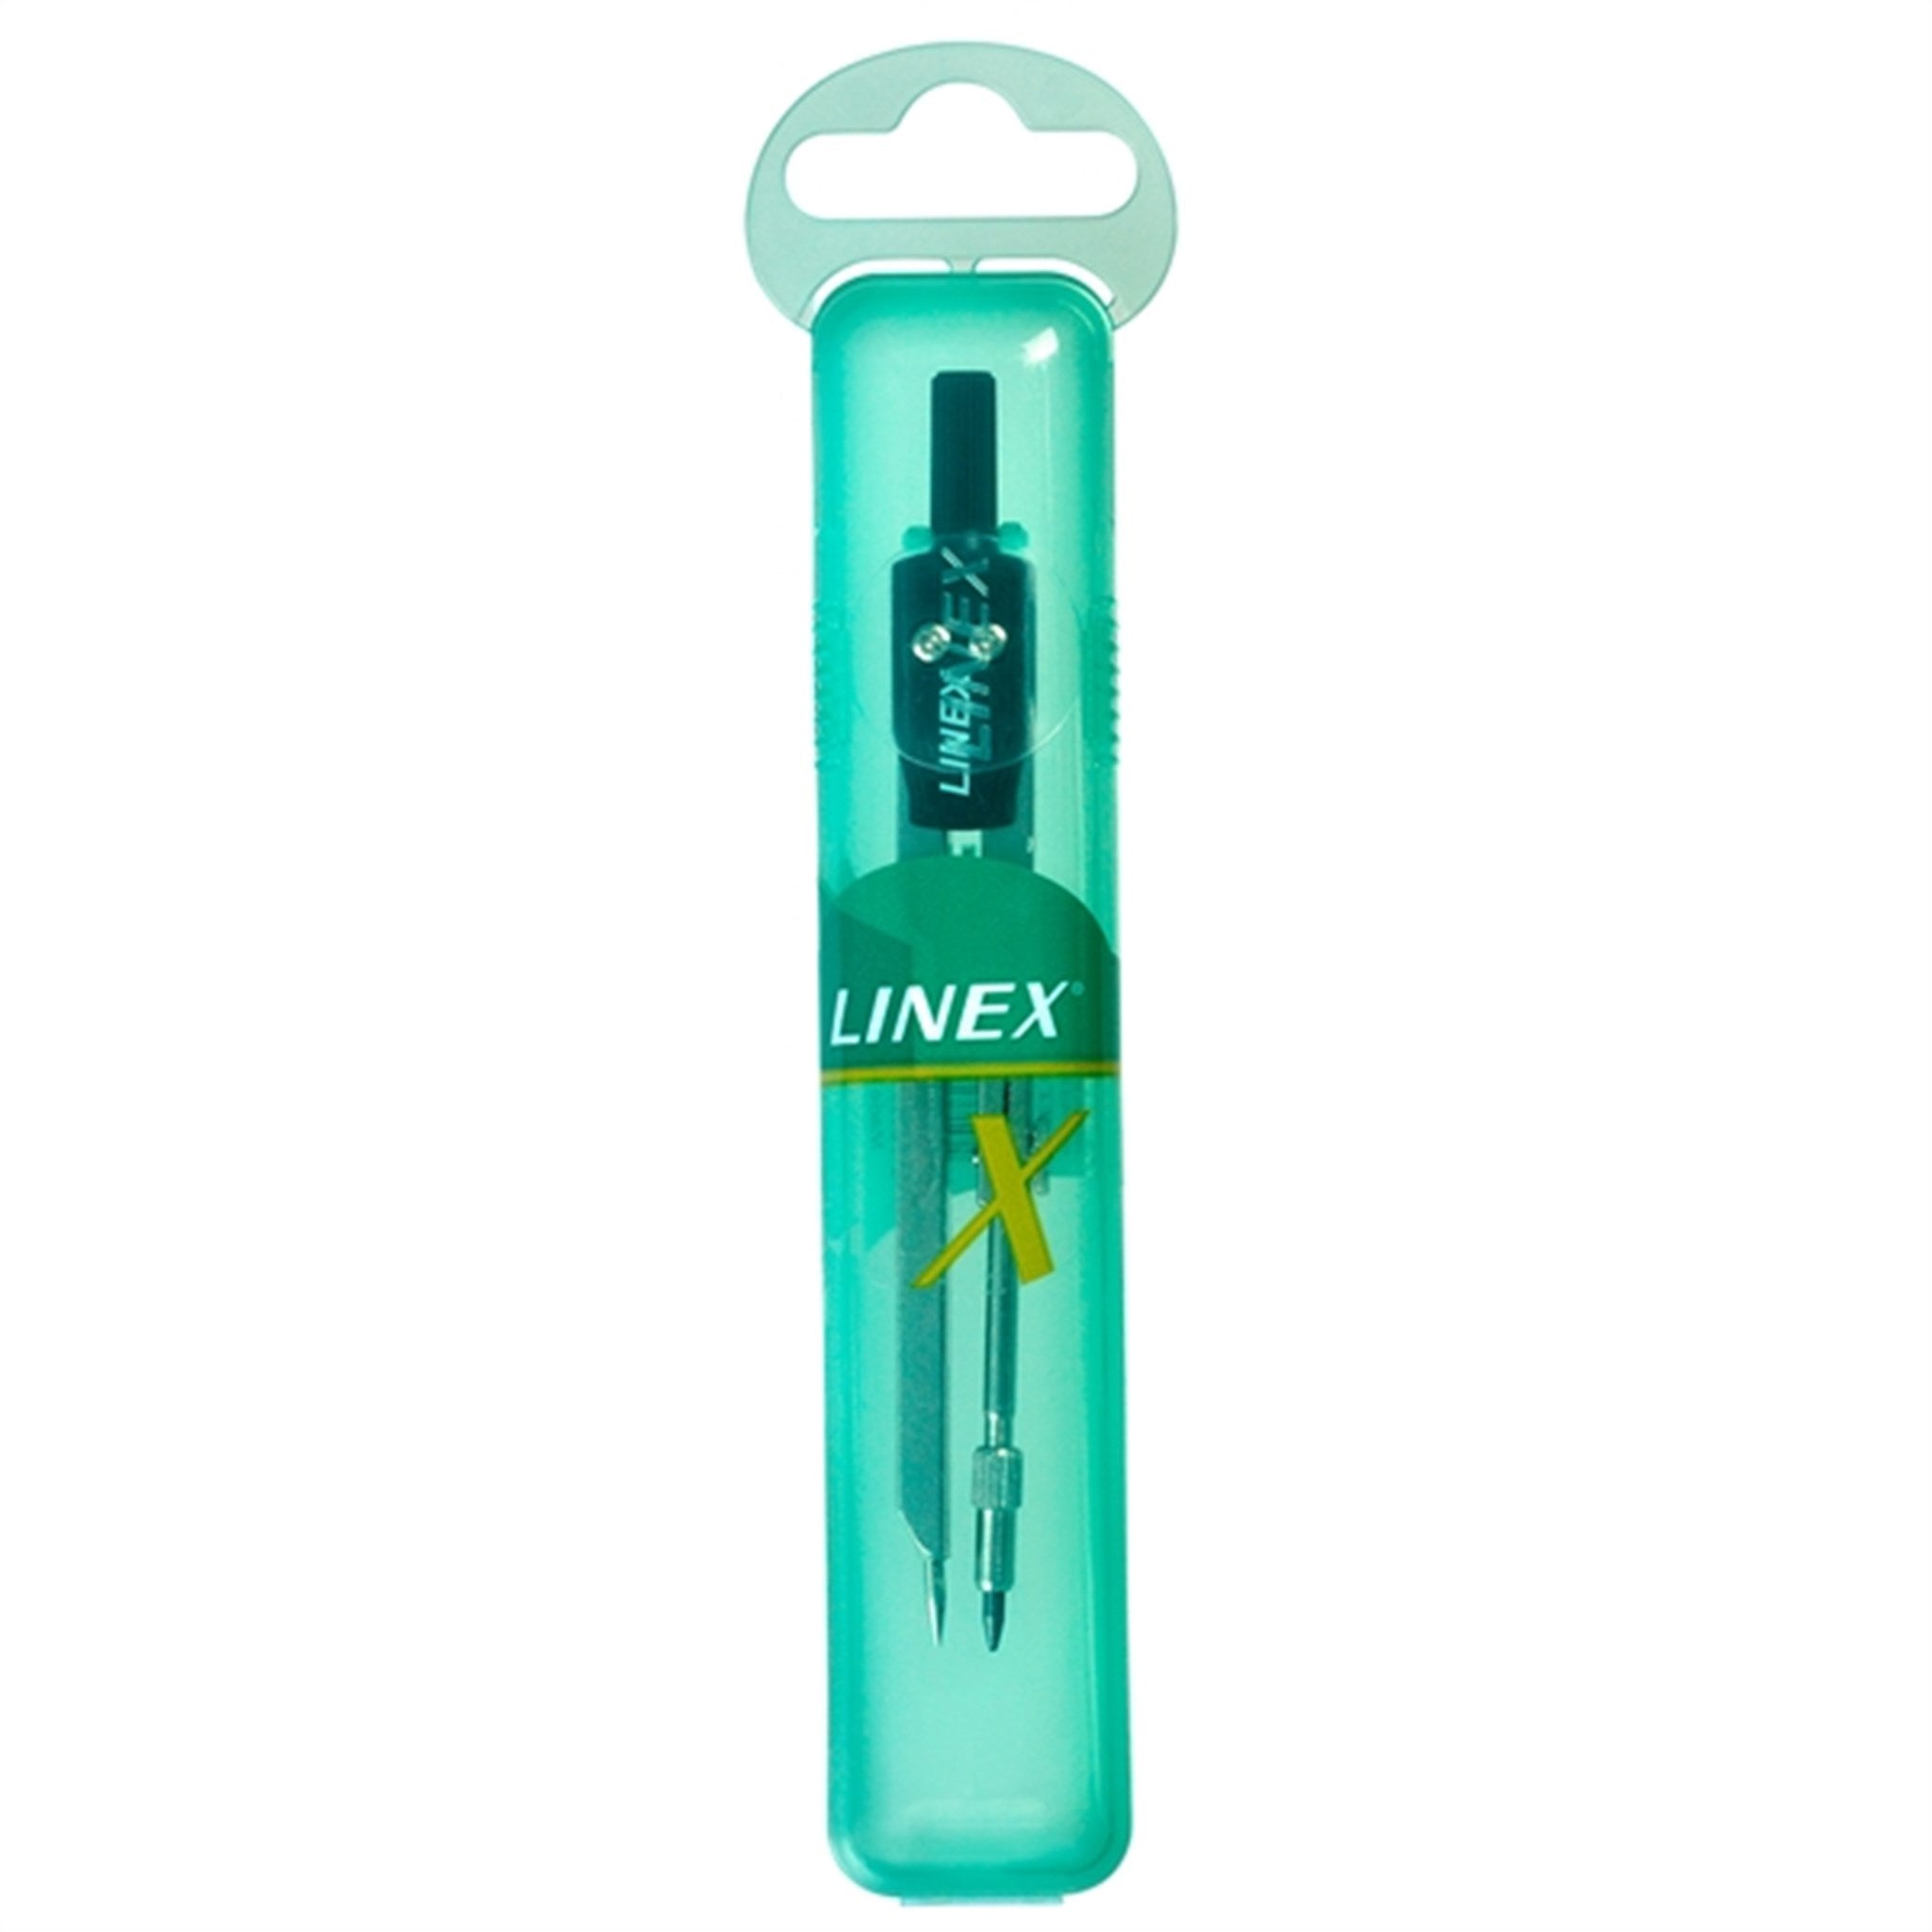 Linex Lead Compass 401 3